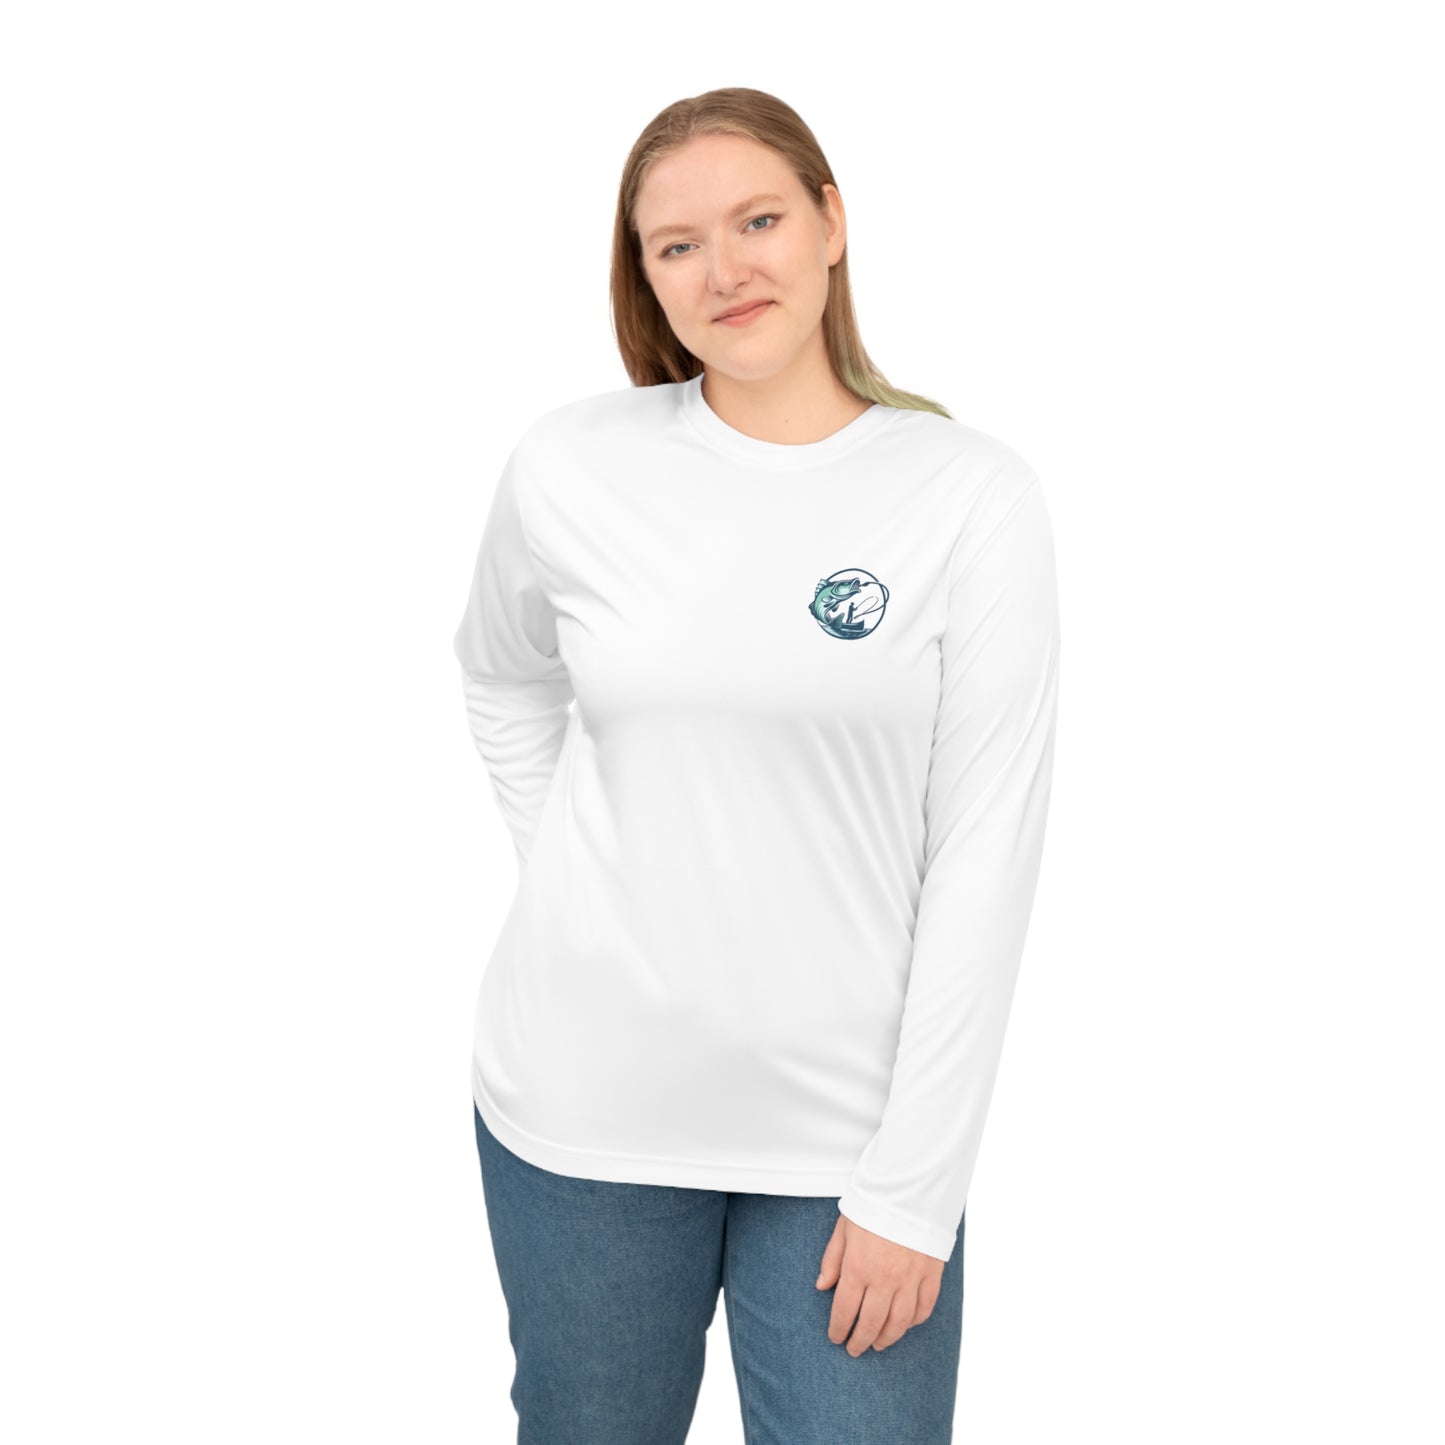 Montauk Fishing Capital Performance Shirt - UV Protection, Moisture-Wicking, Long-Sleeve